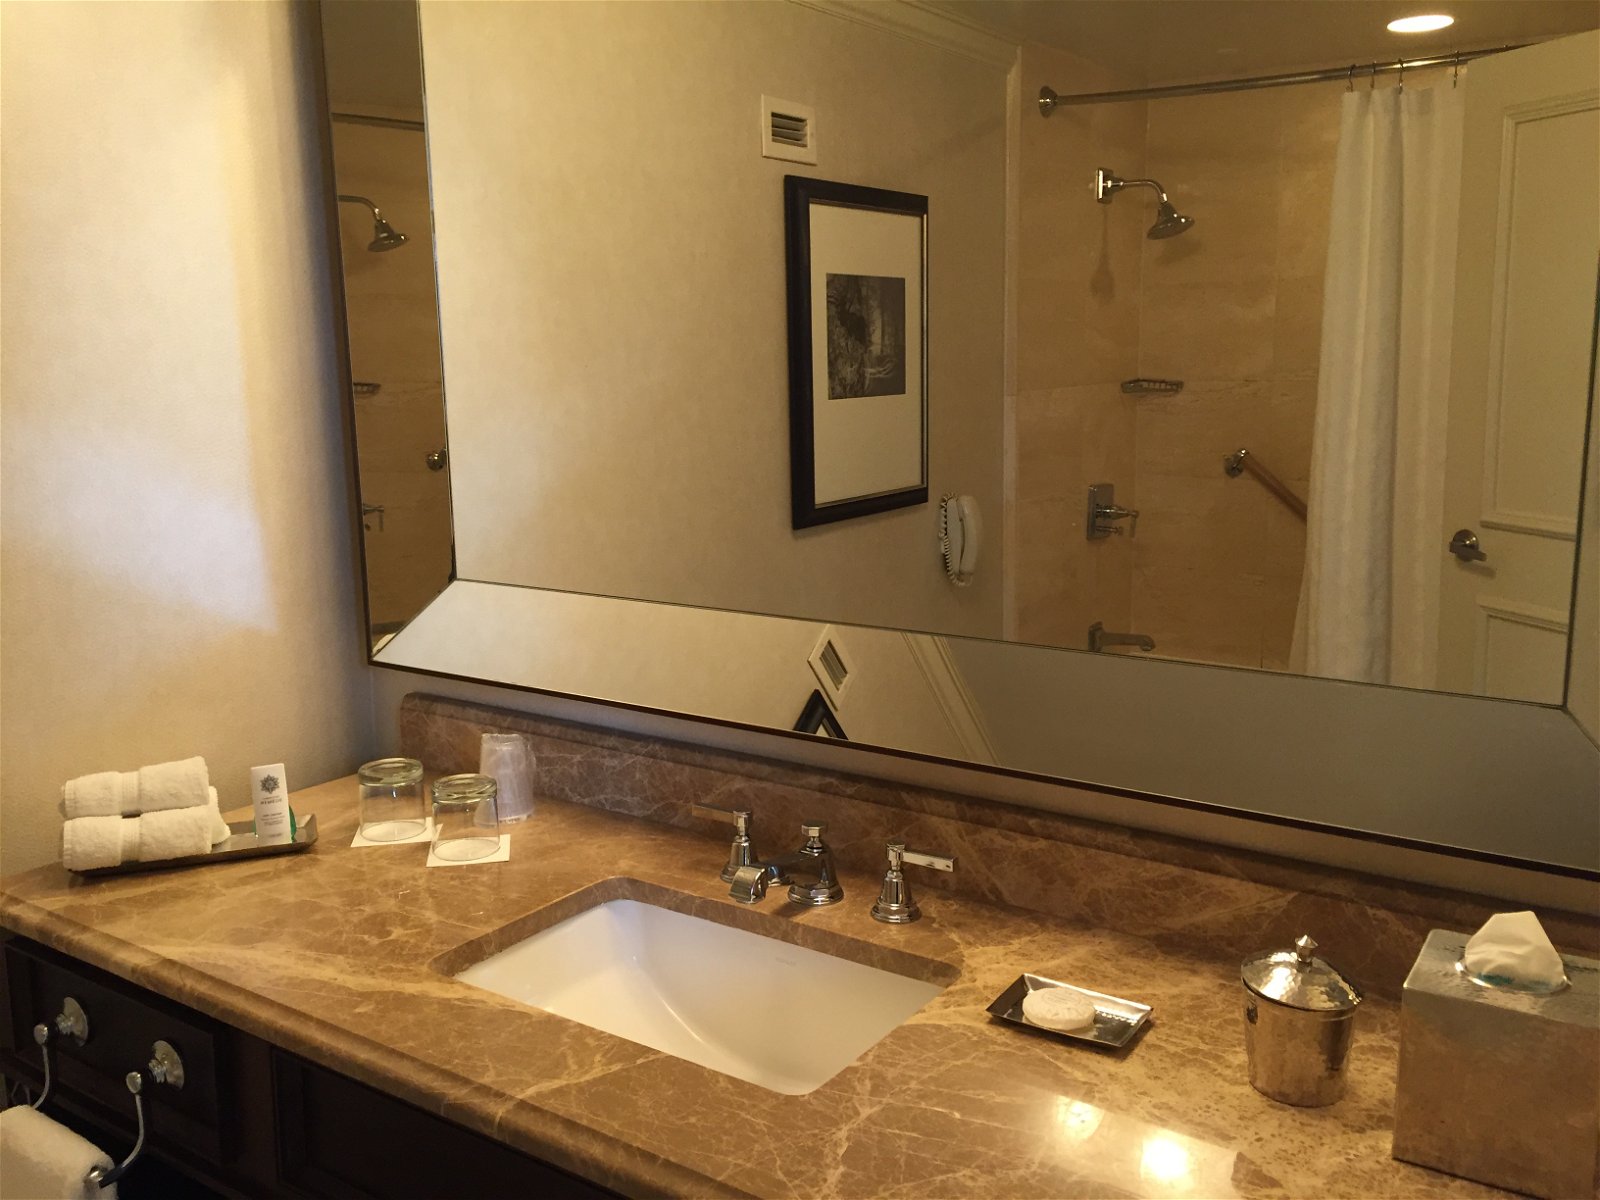 St. Regis Houston Grand Luxe Room bathroom